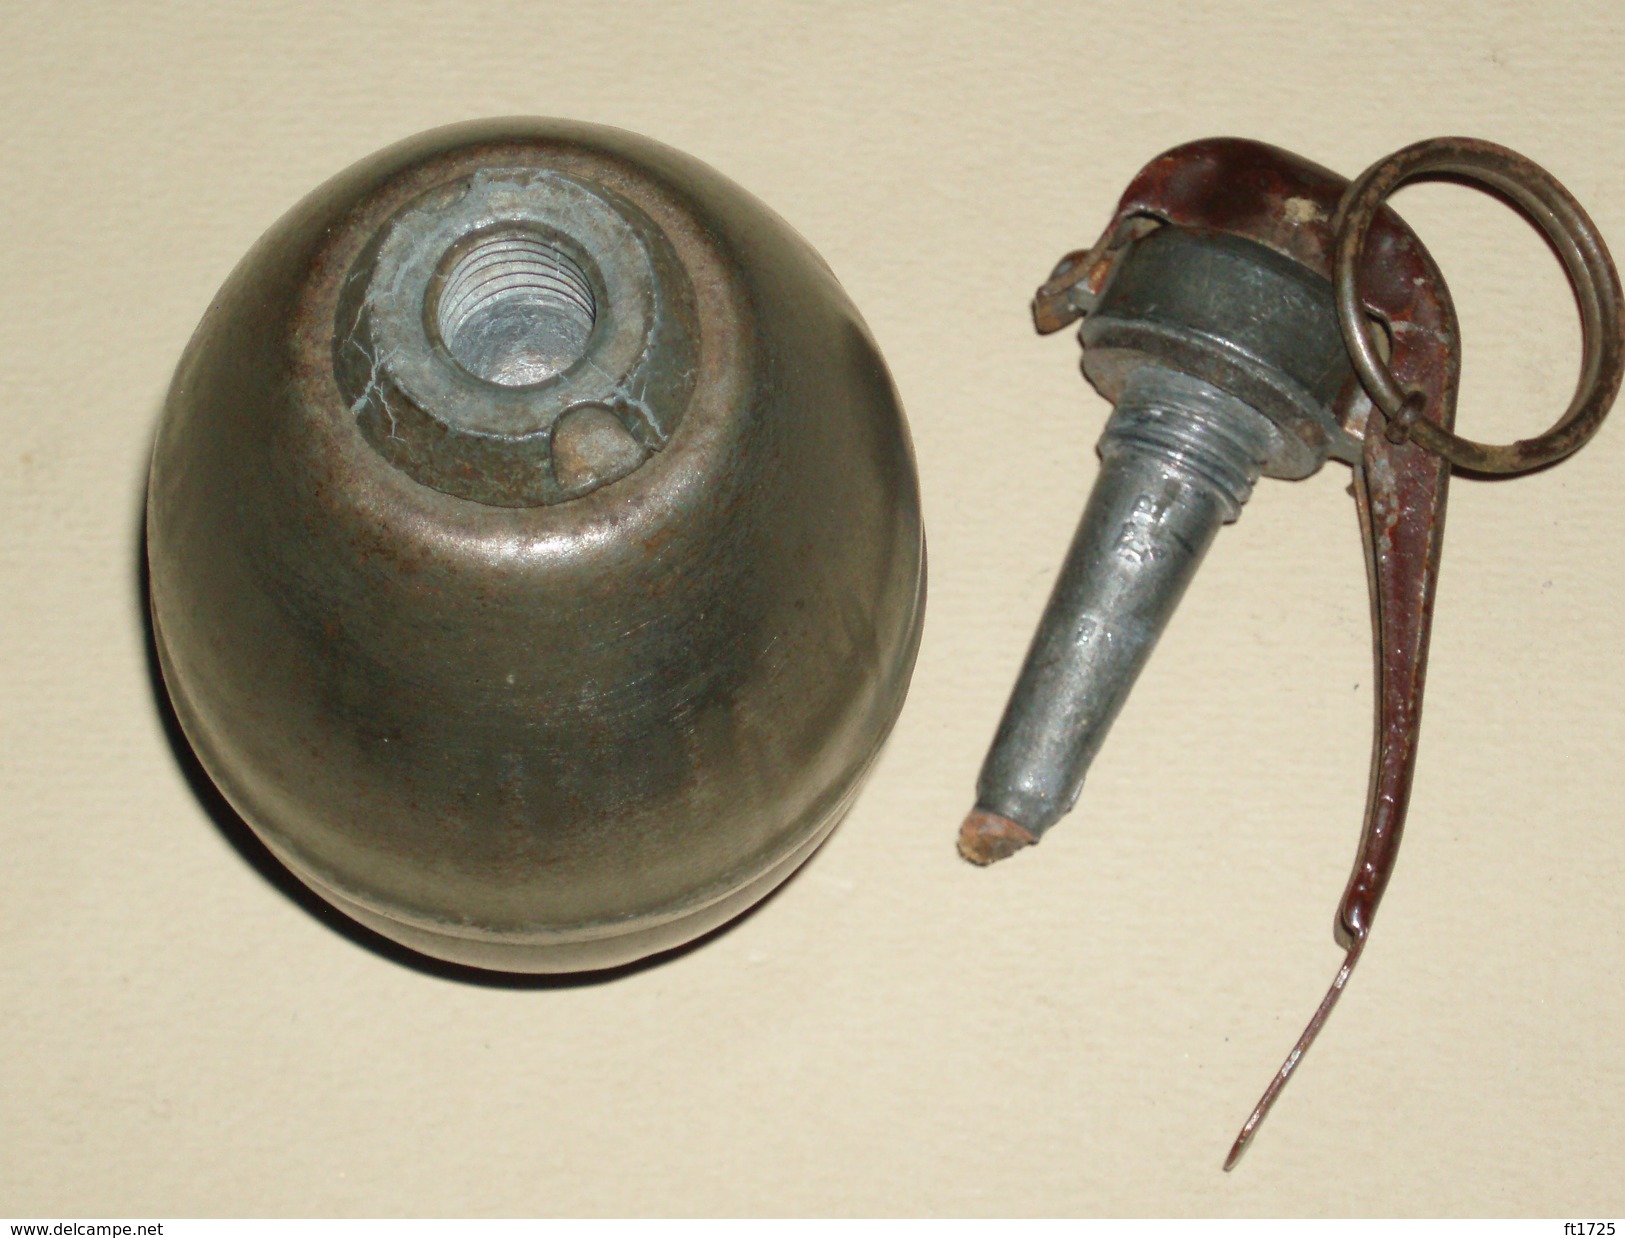 127 007 superbe et rare grenade incendiaire francaise 1916